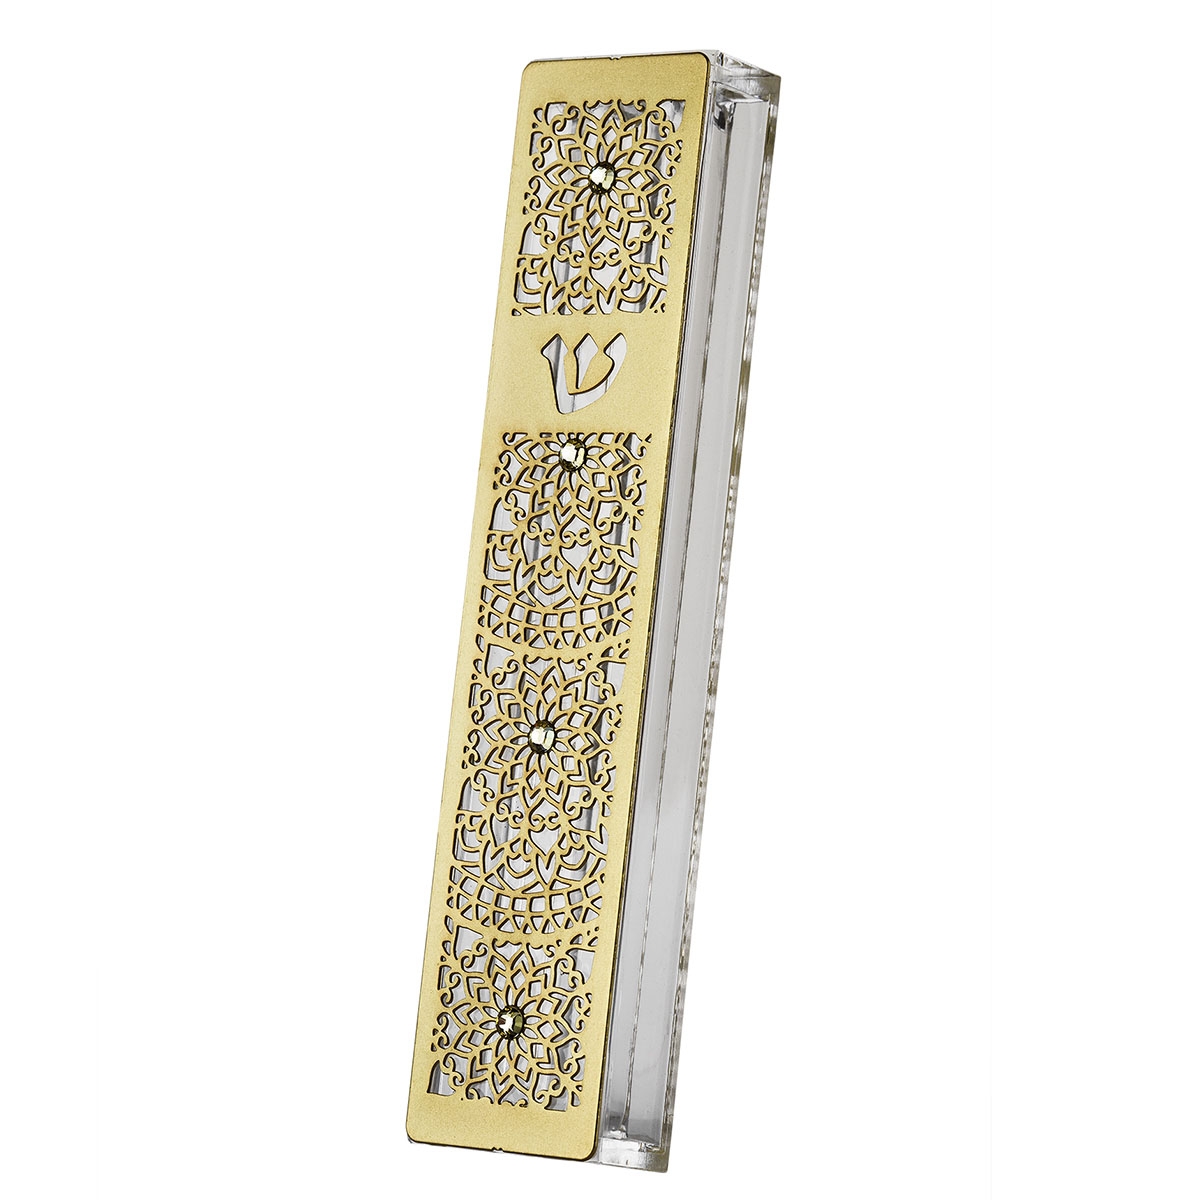 Dorit Judaica Gold-Plated Acrylic Mezuzah Case With Mandala Pattern - 1